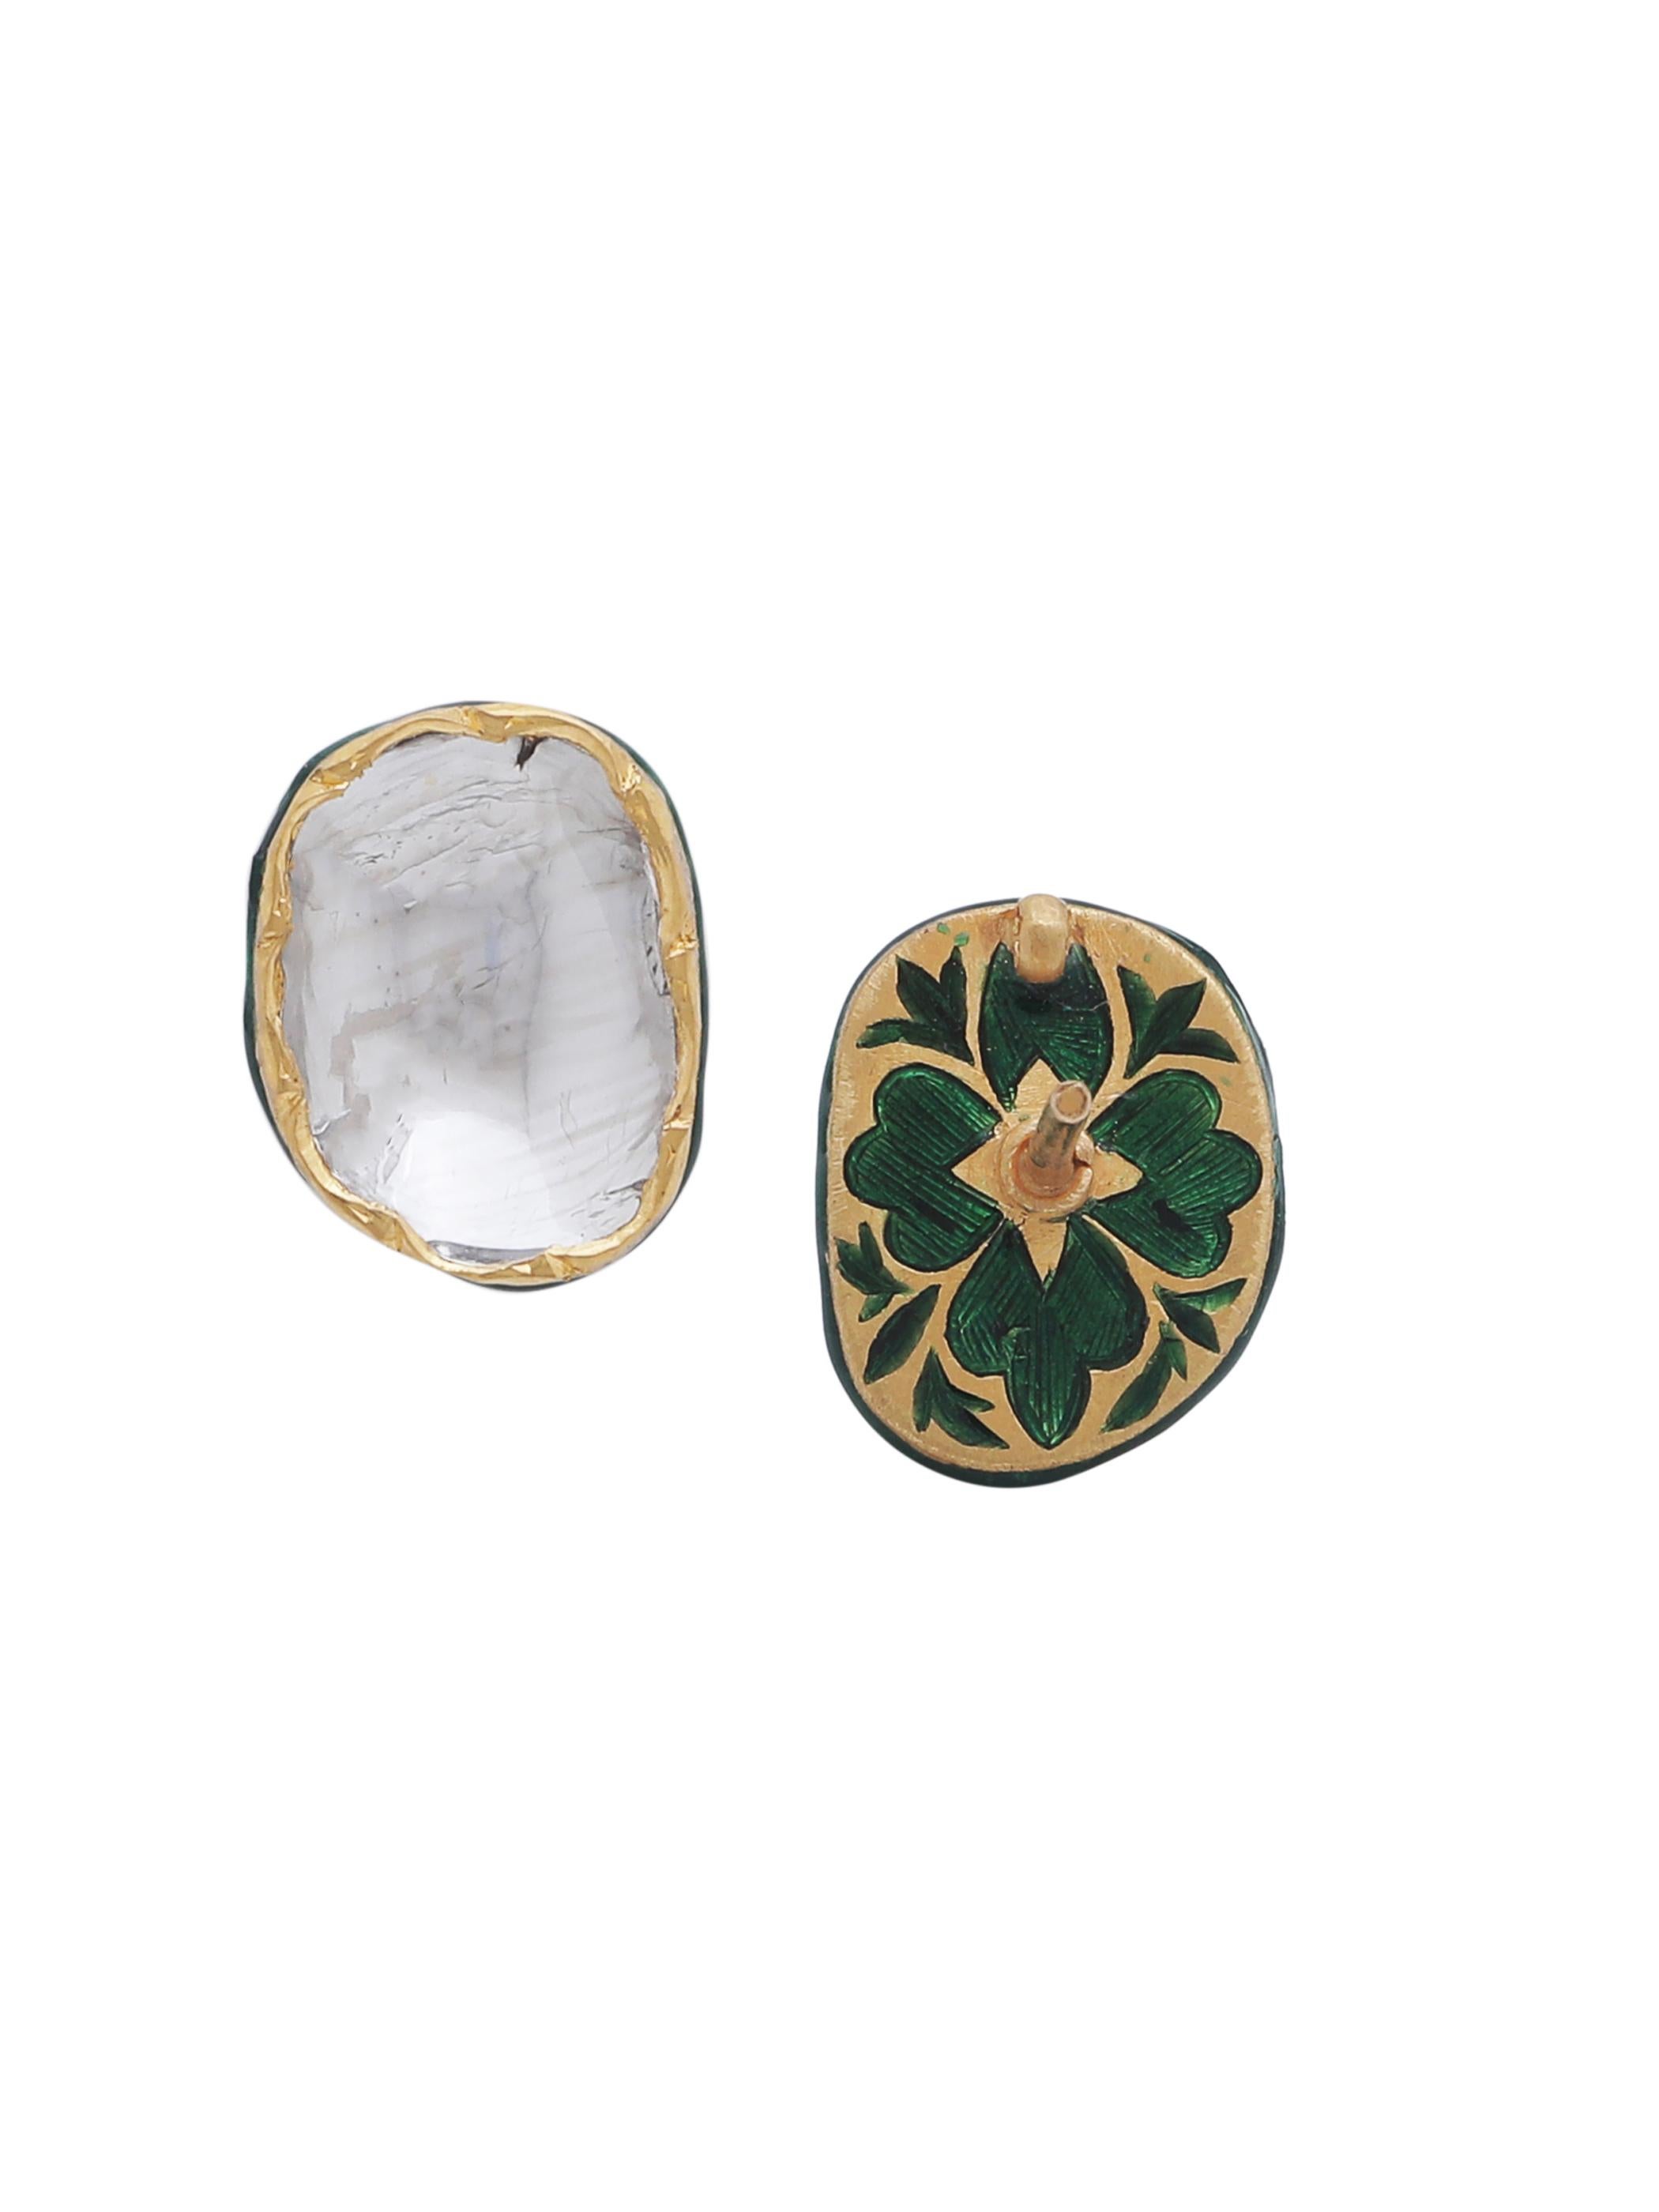 Art Deco 2.48 Carat Diamond Earrings Handcrafted in 18K Gold with Intricate Enamel Work